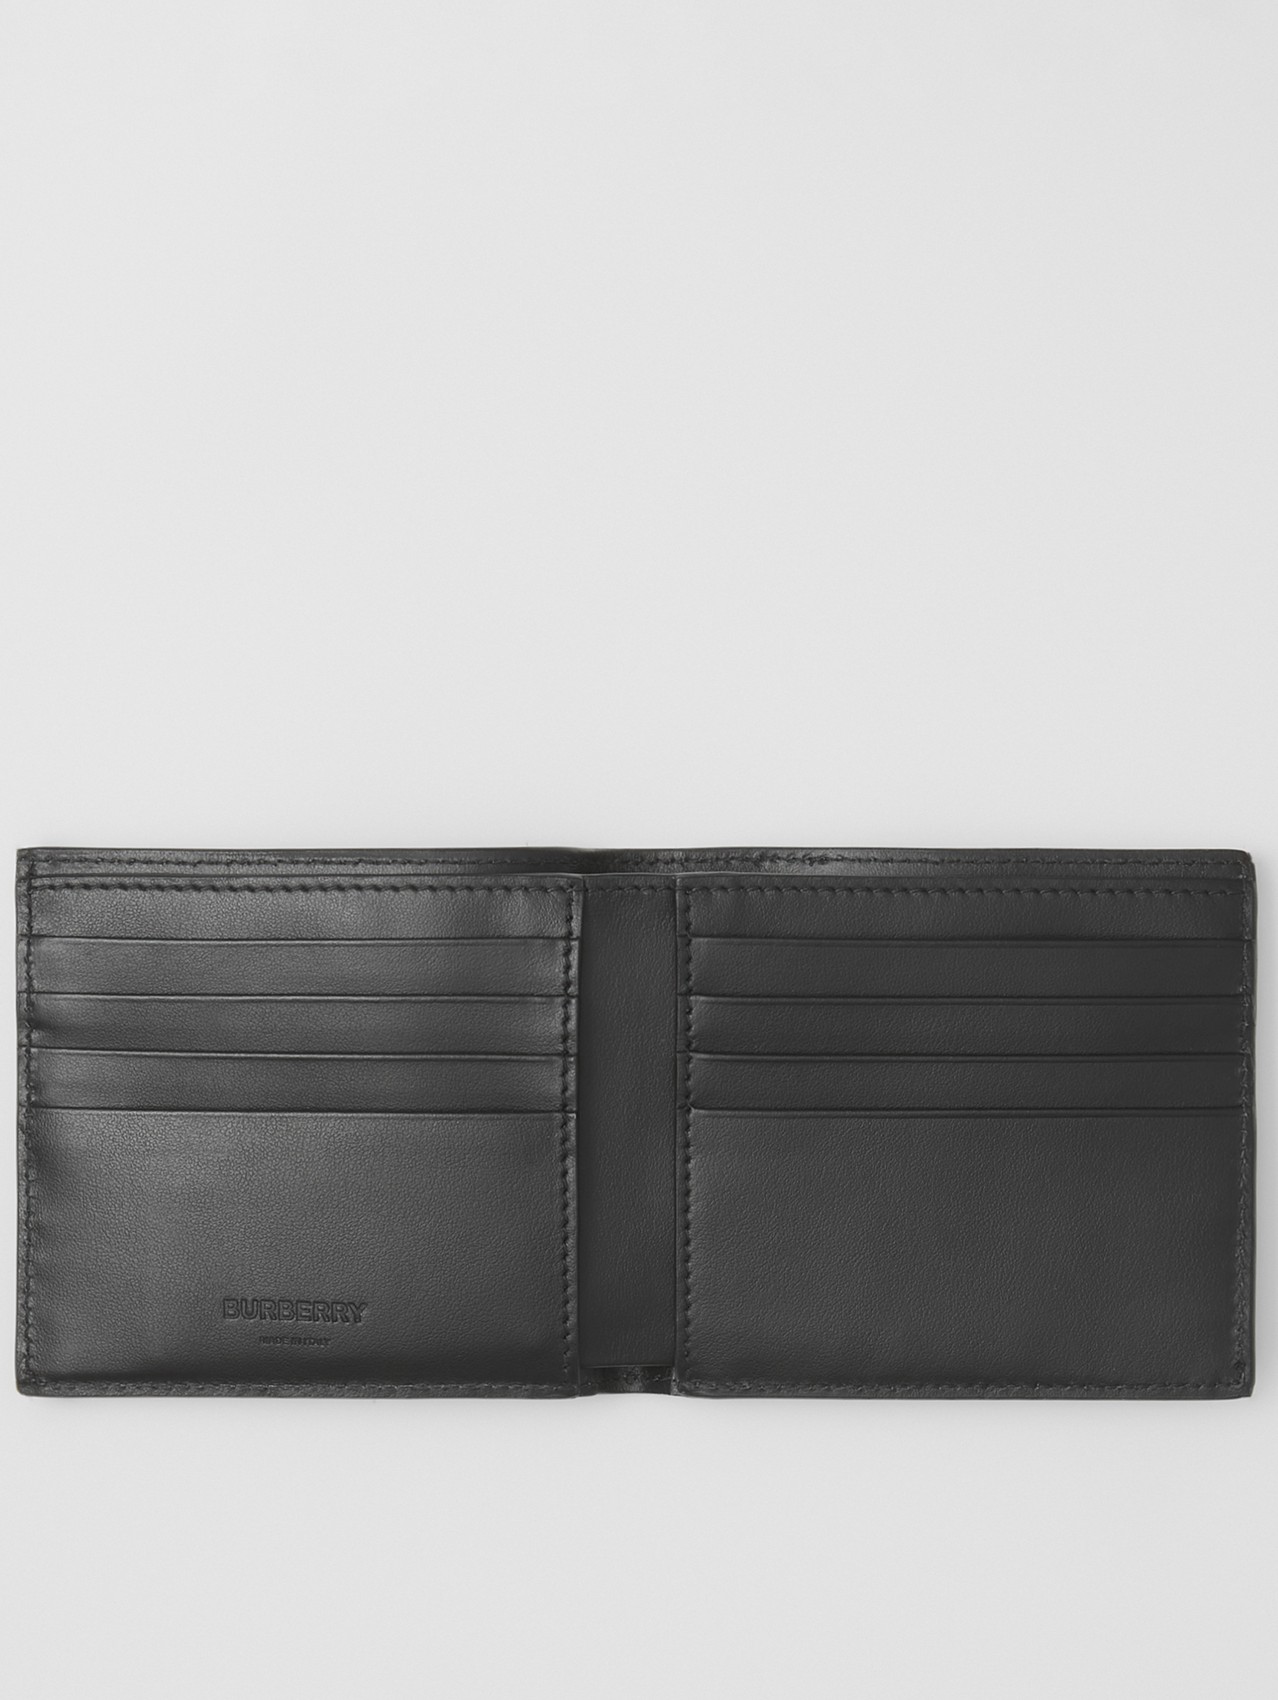 Stripe Intarsia Leather International Bifold Wallet in Driftwood/black/red